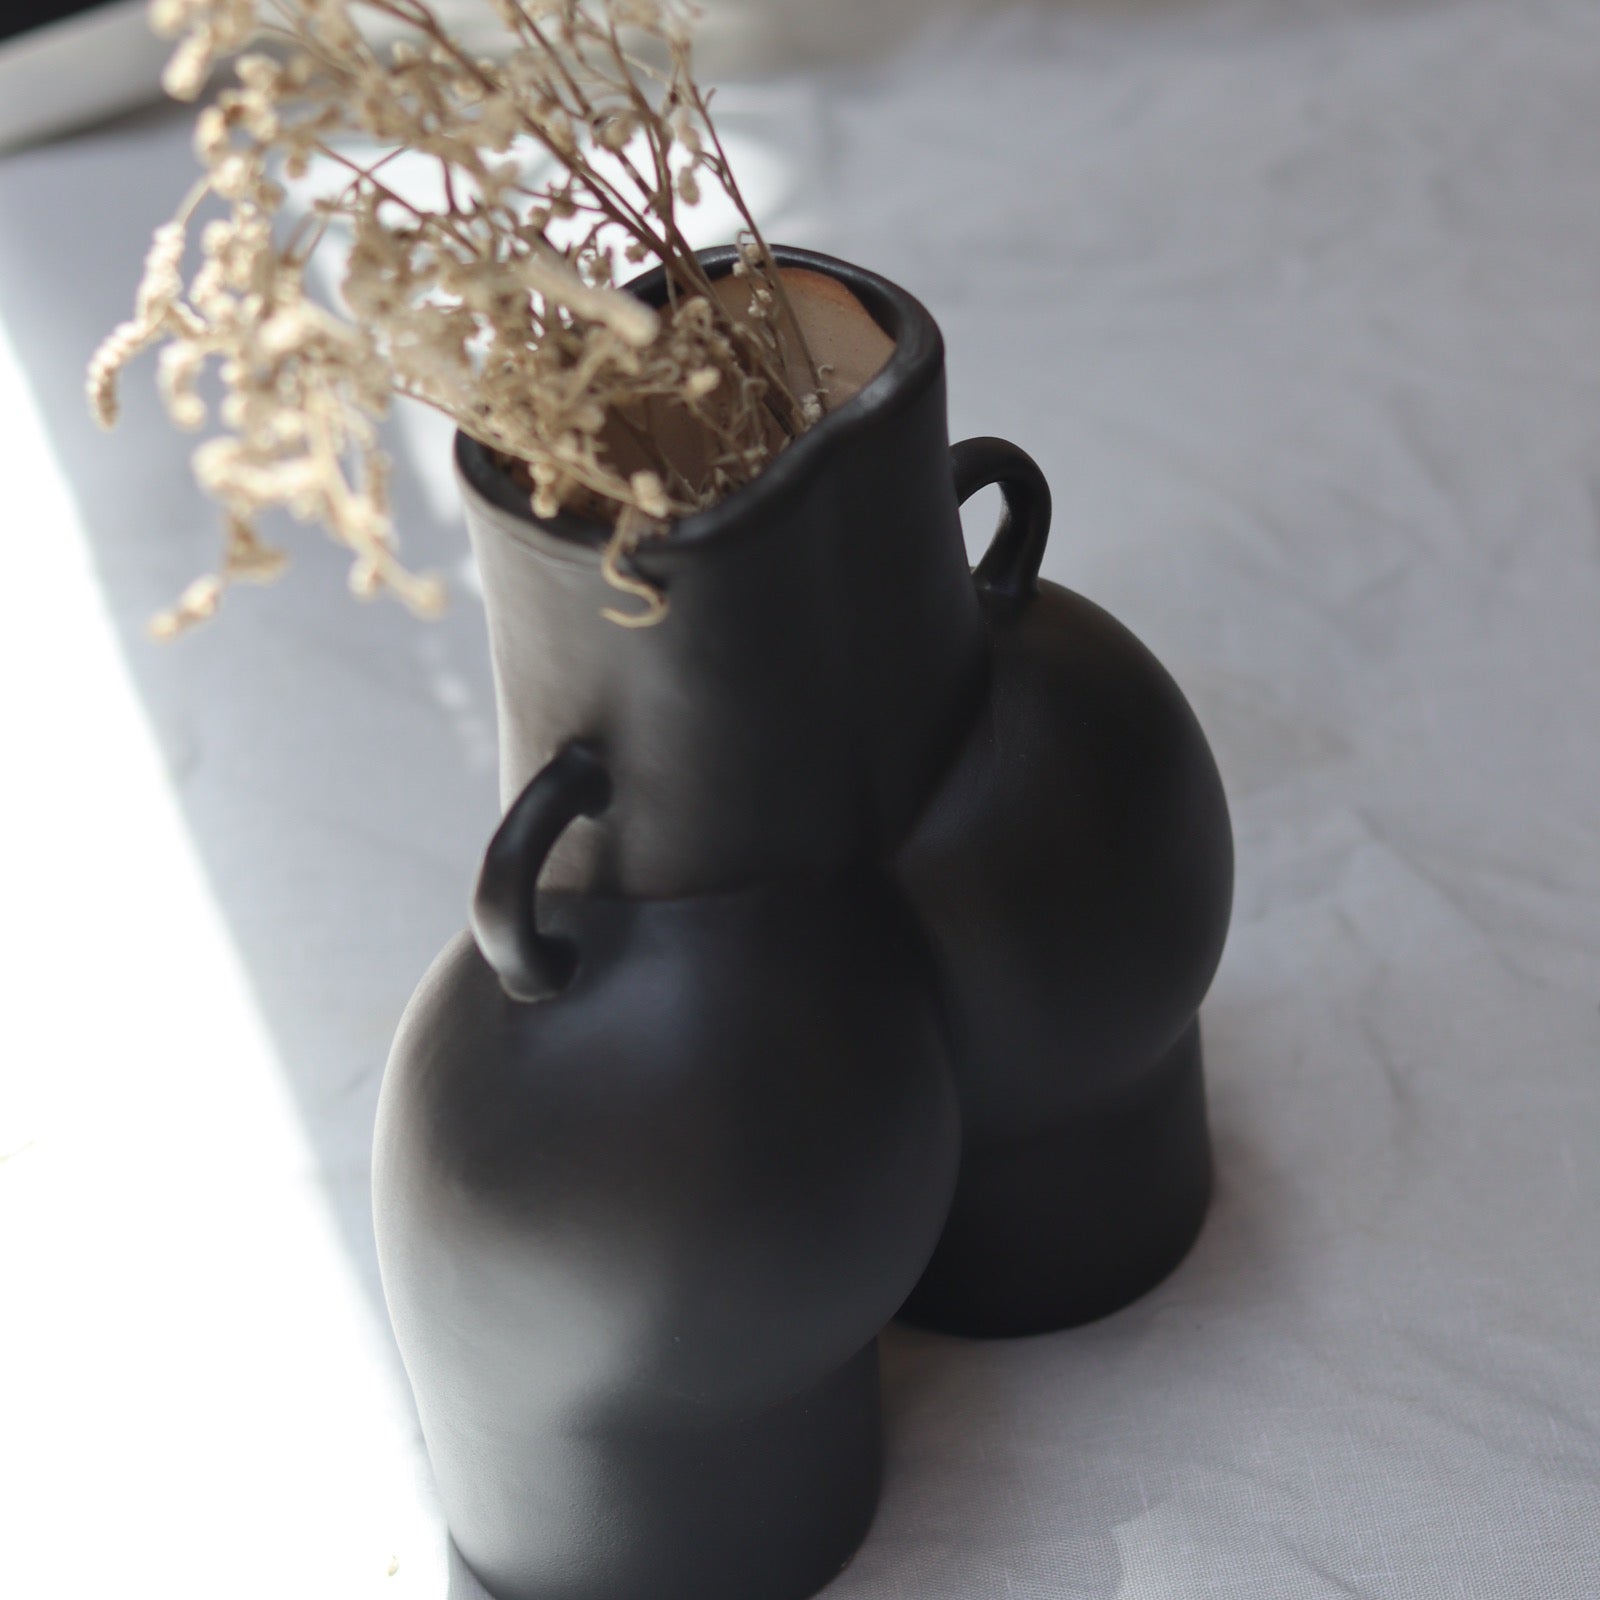 Body vase with flowers